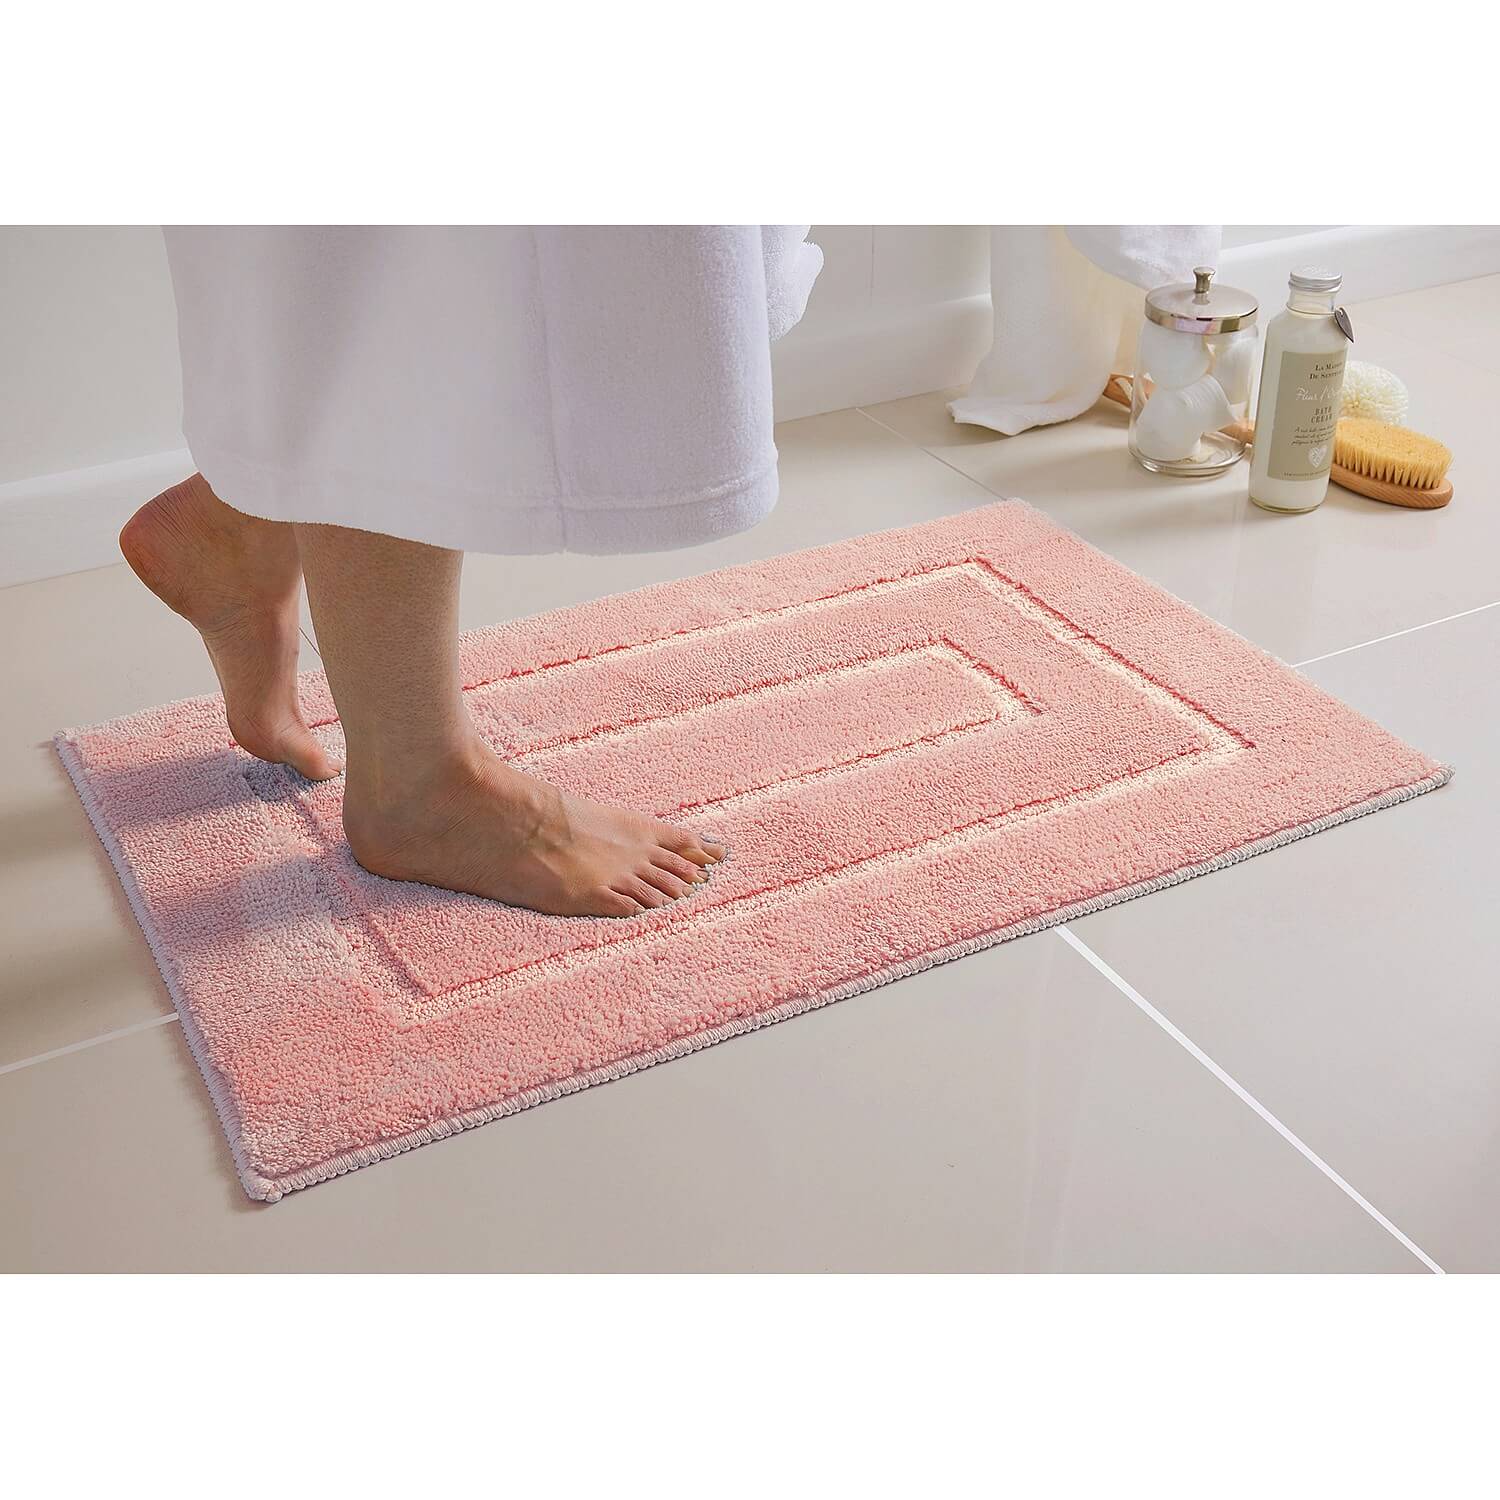 plush bathroom mats